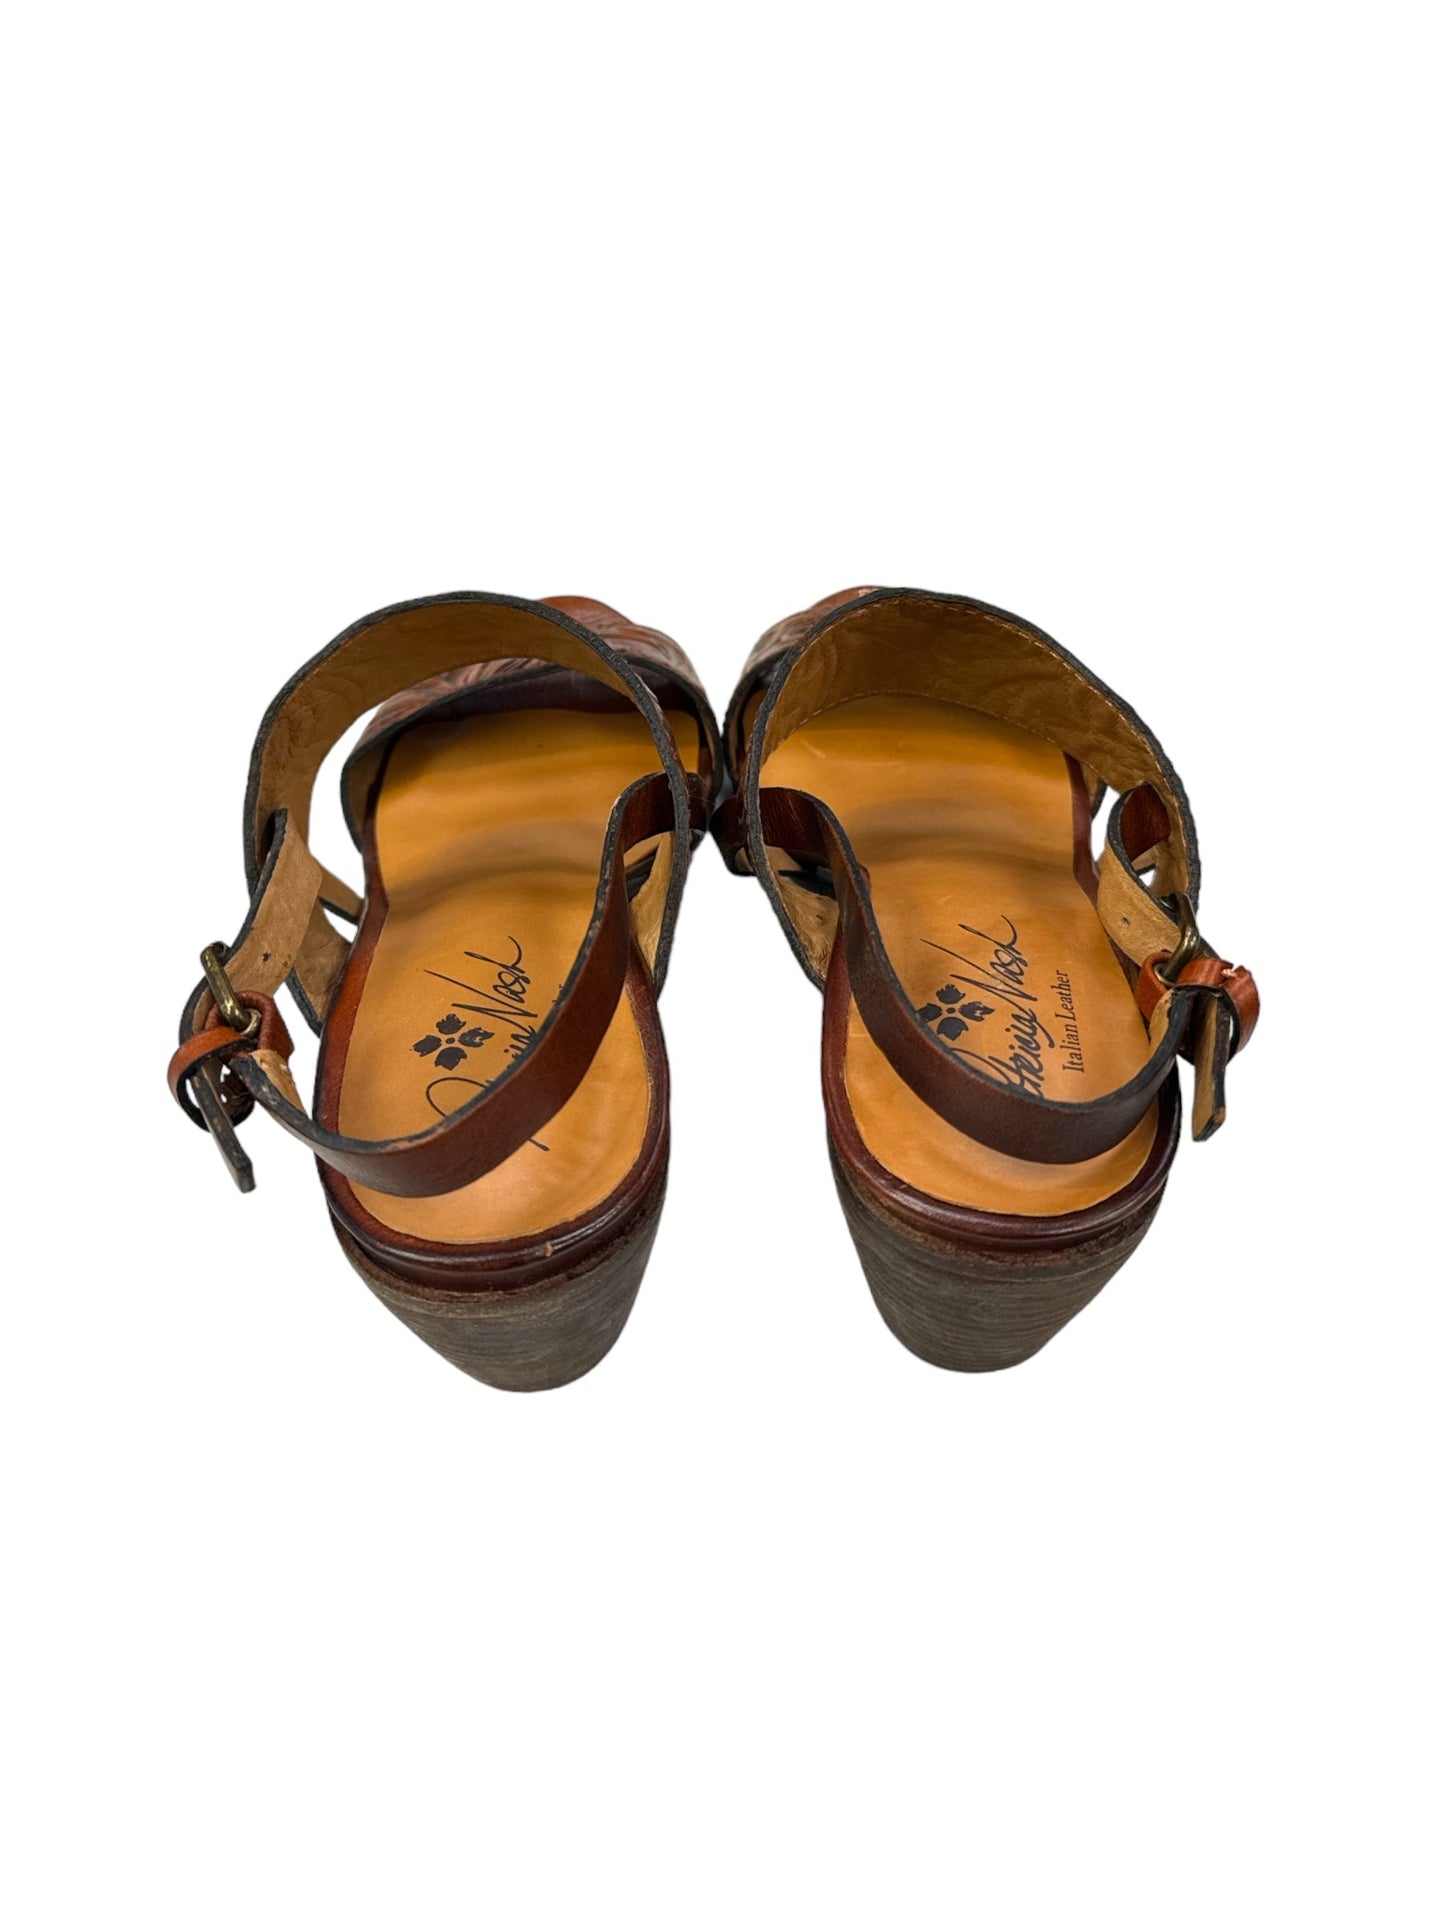 Brown Shoes Designer Patricia Nash, Size 9.5